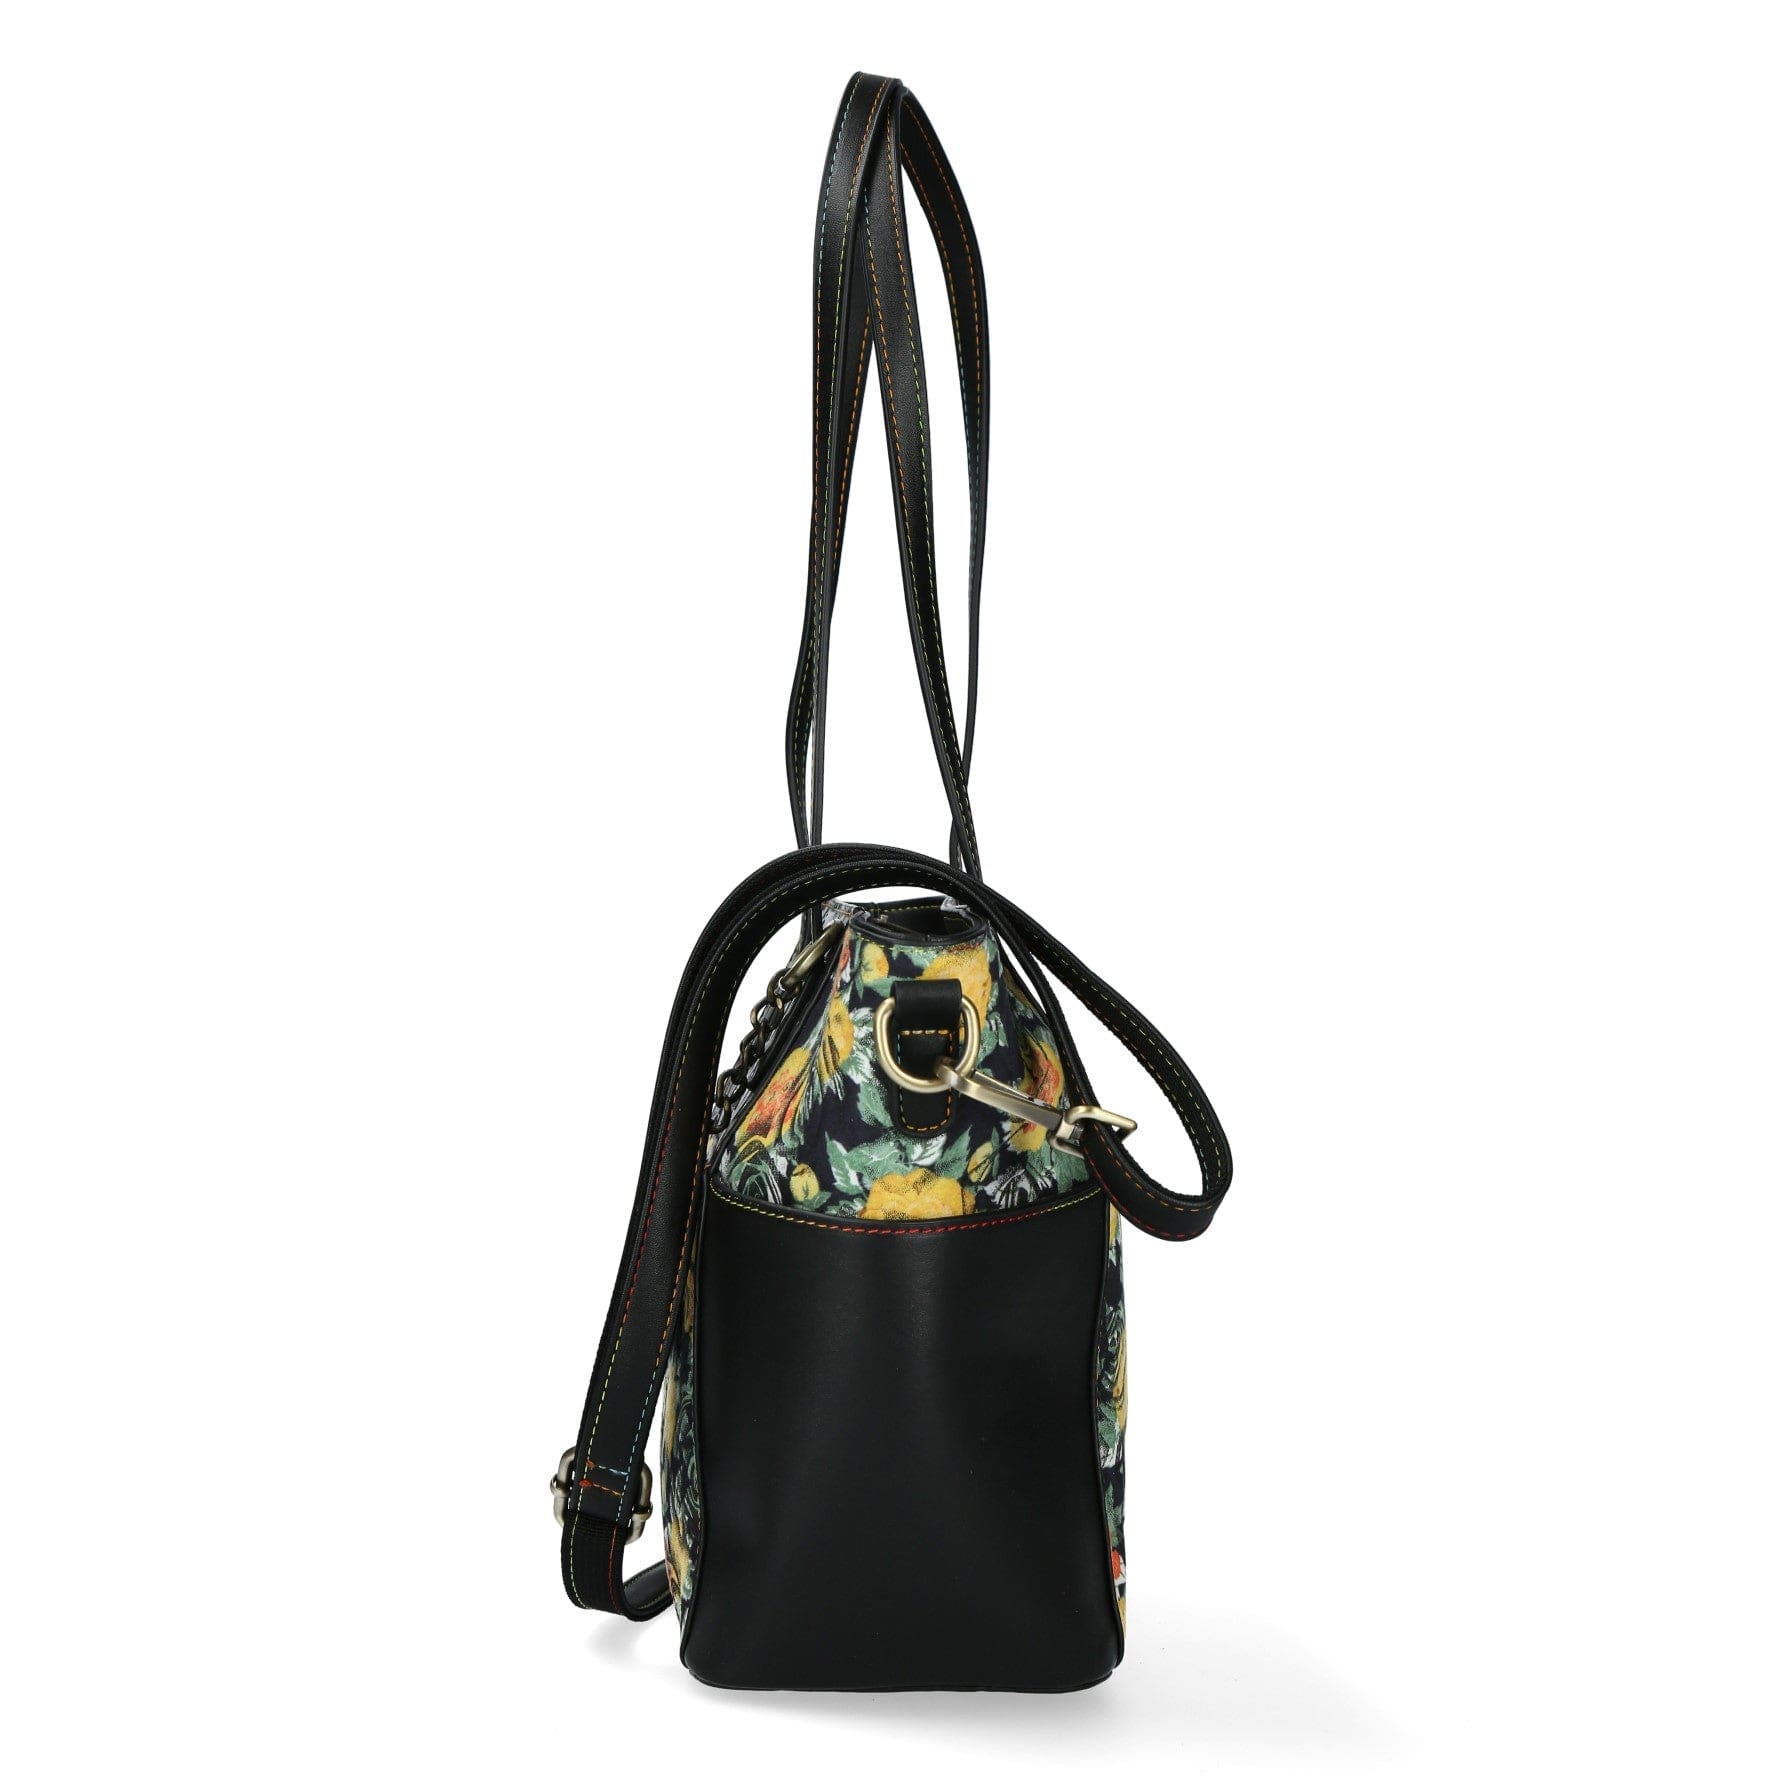 Leather Handbag 4739B - Black - Bag